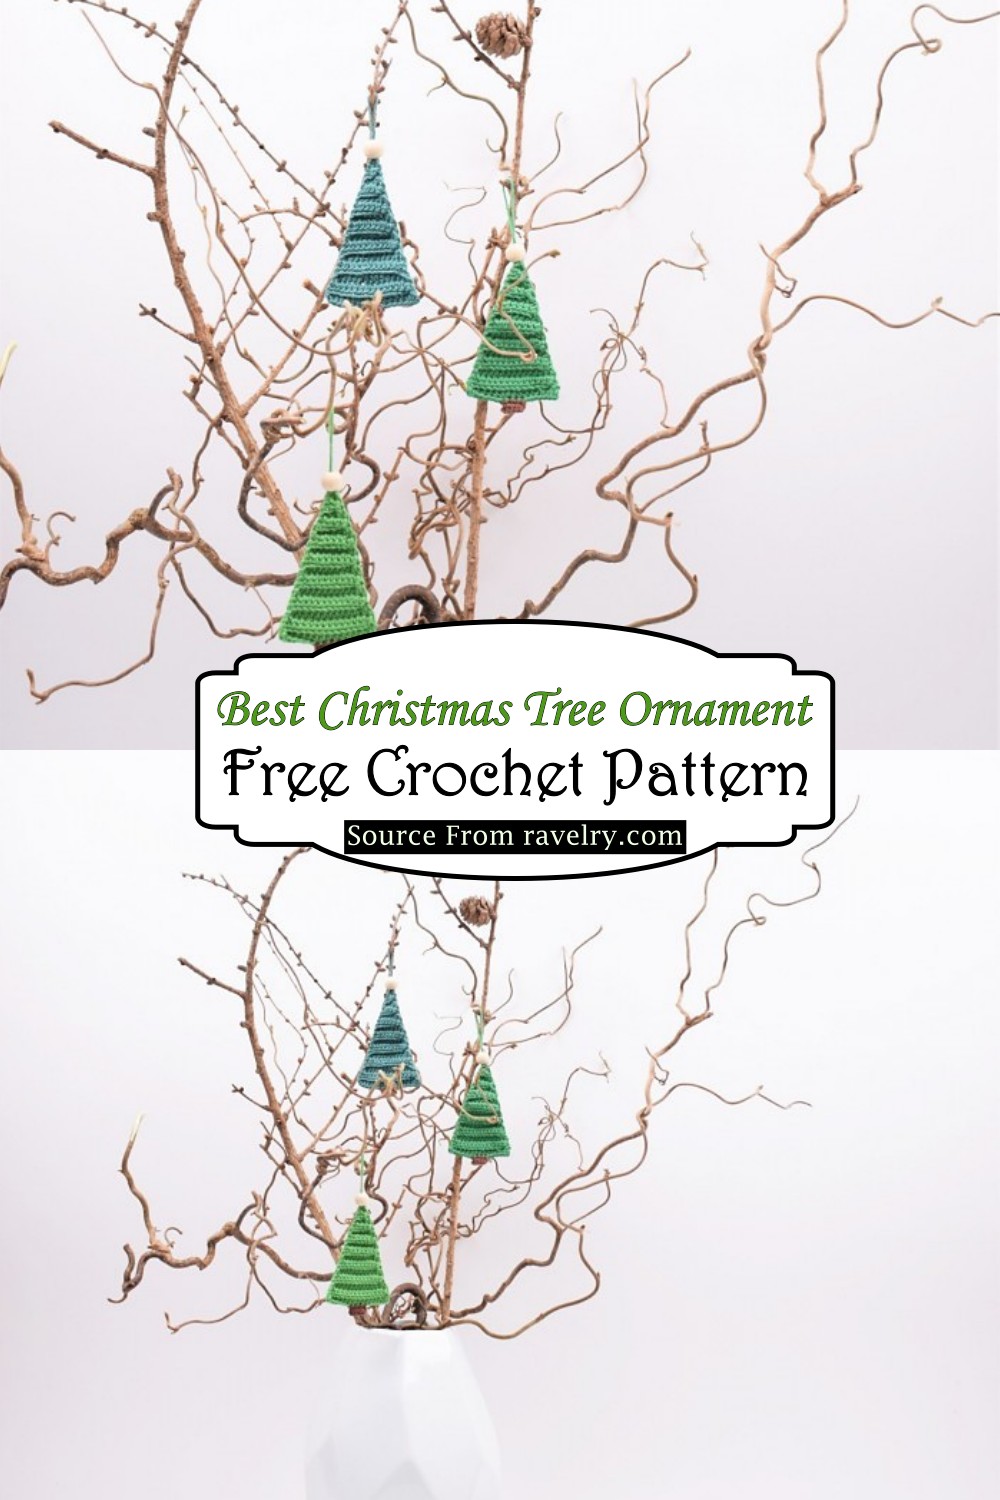 Crochet Best Christmas Tree Ornament Pattern